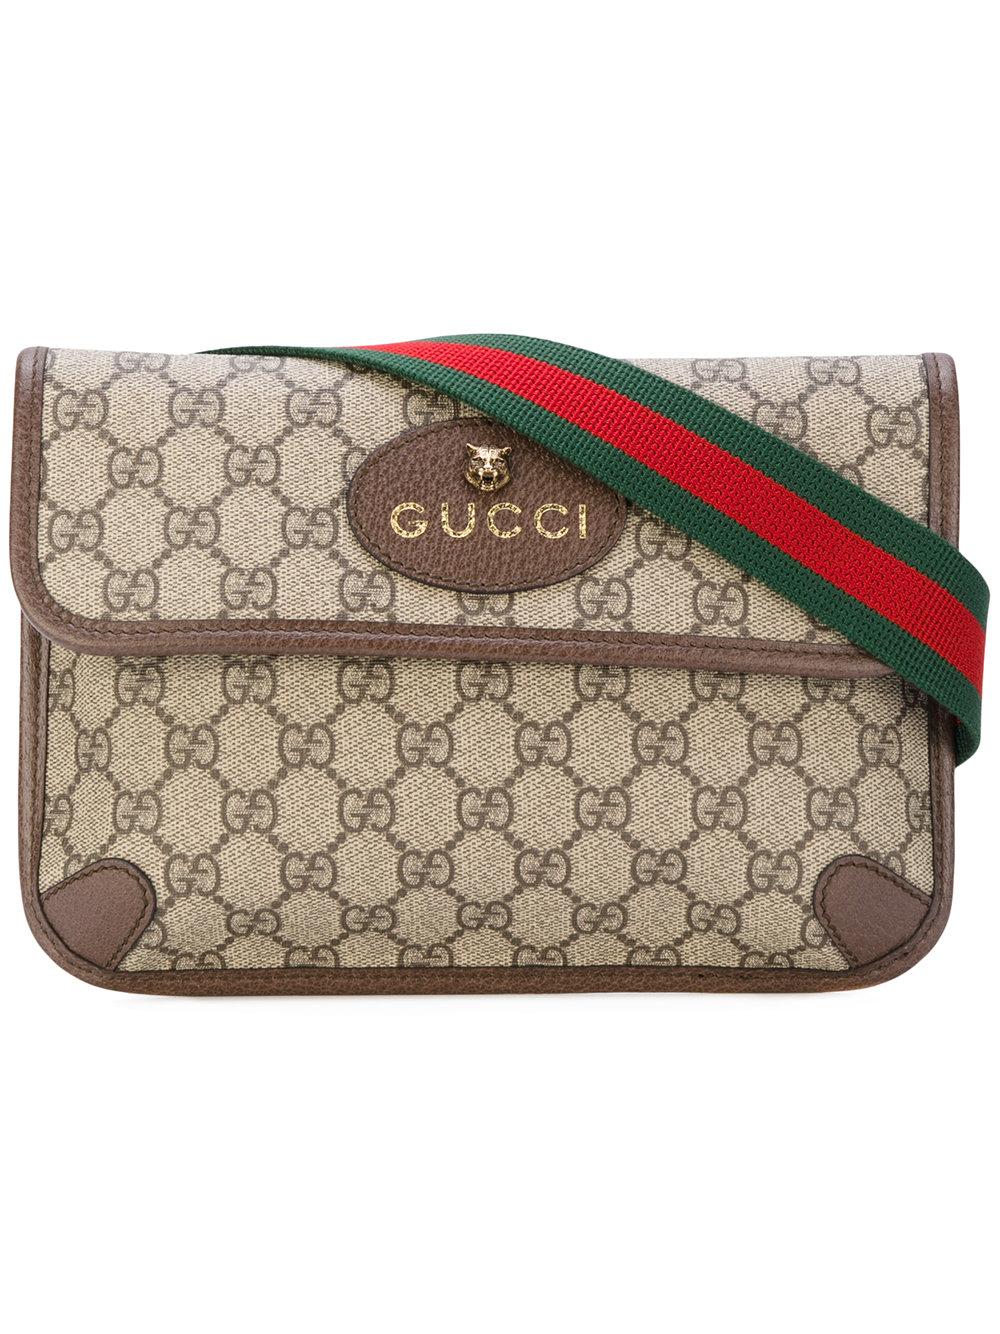 Gucci Gg Supreme Belt Bag in Brown - Lyst